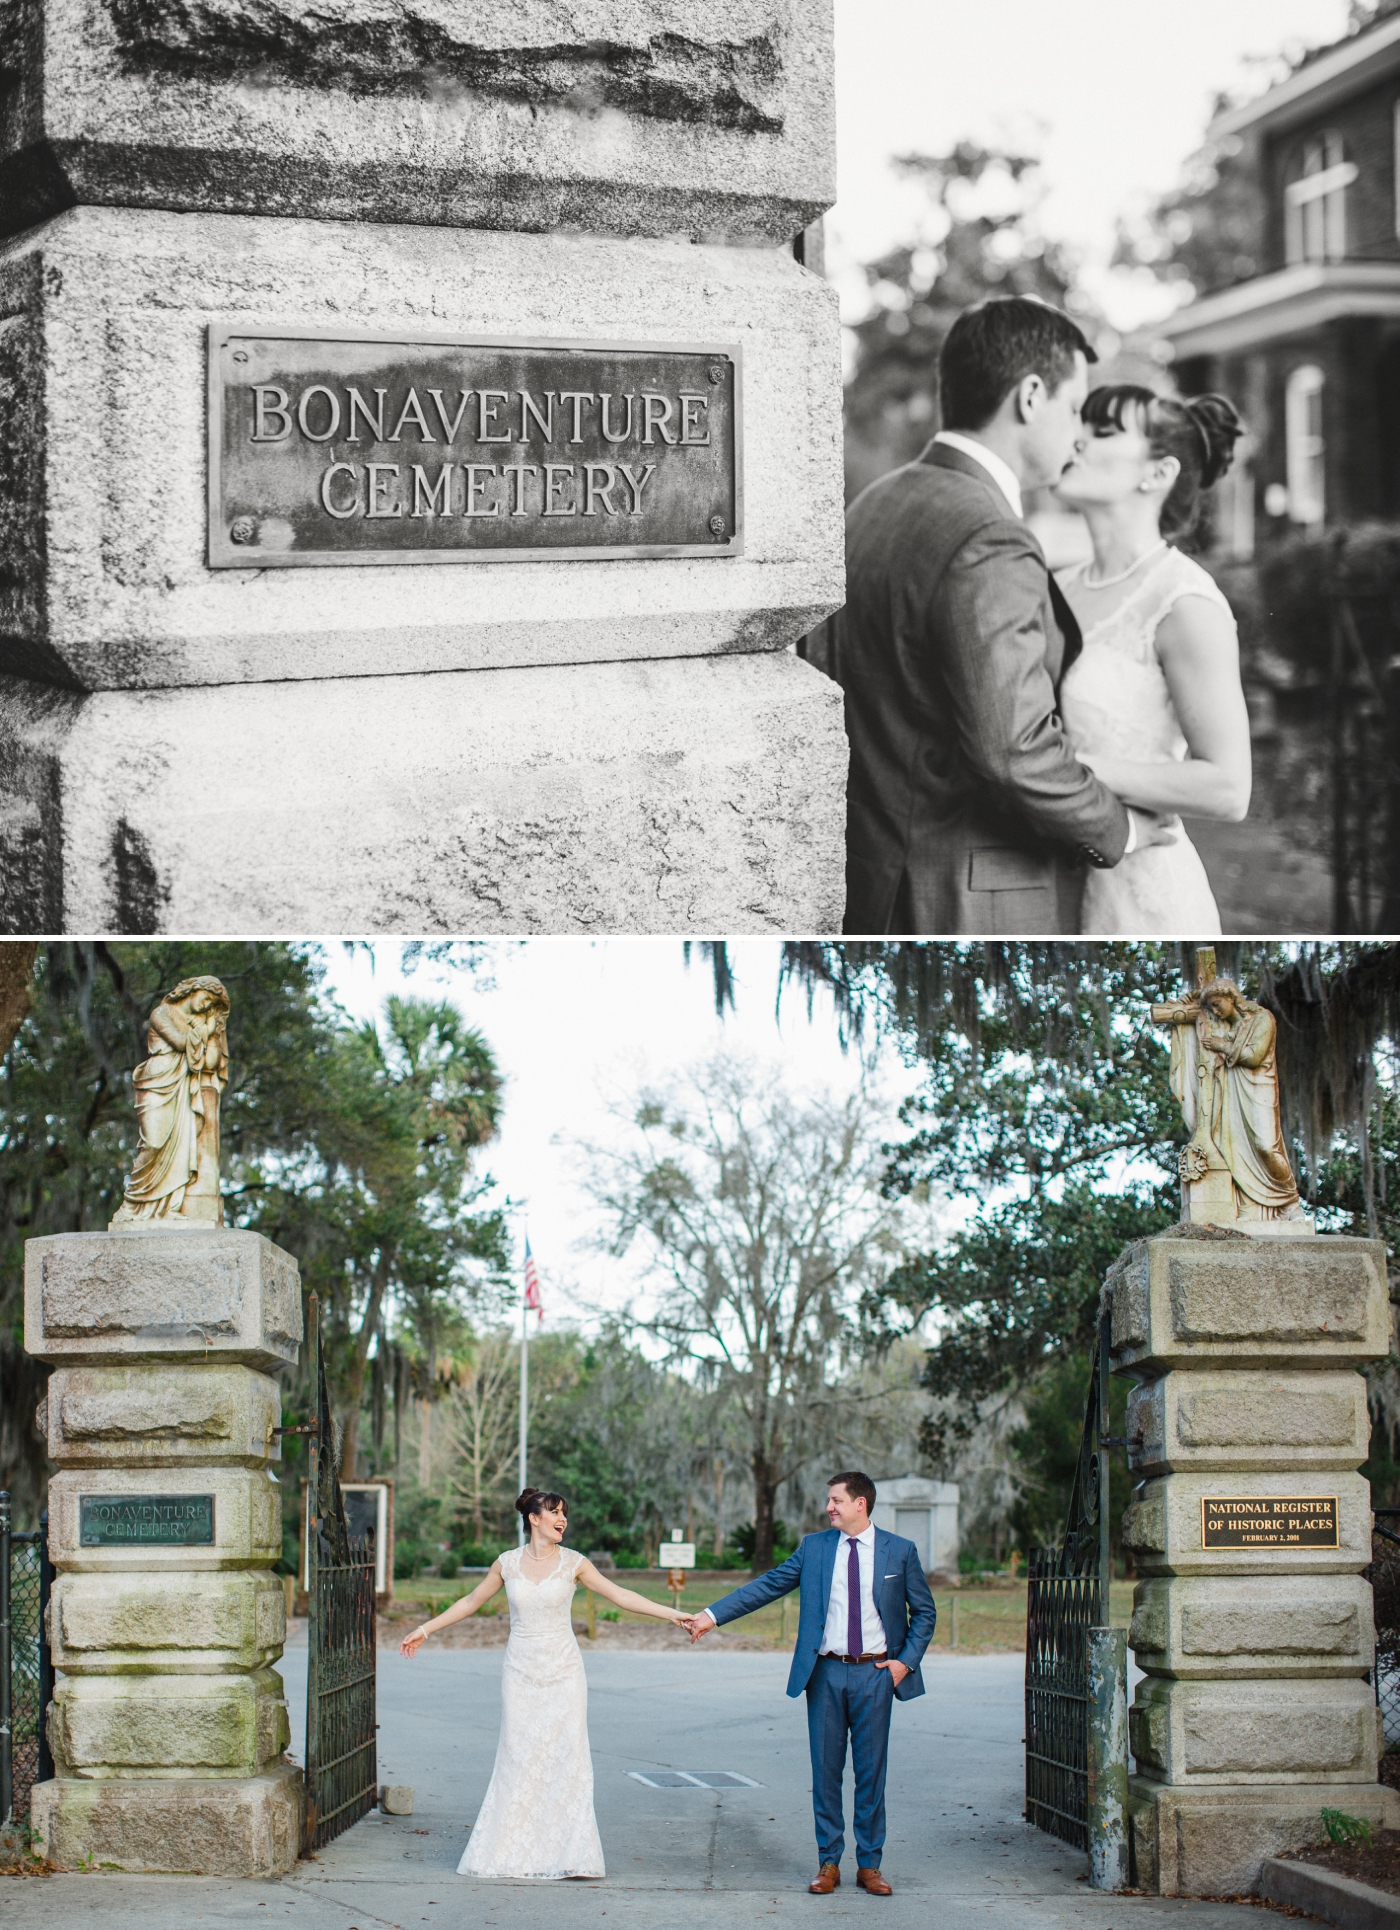 Intimate elopement at Bonaventure Cemetery